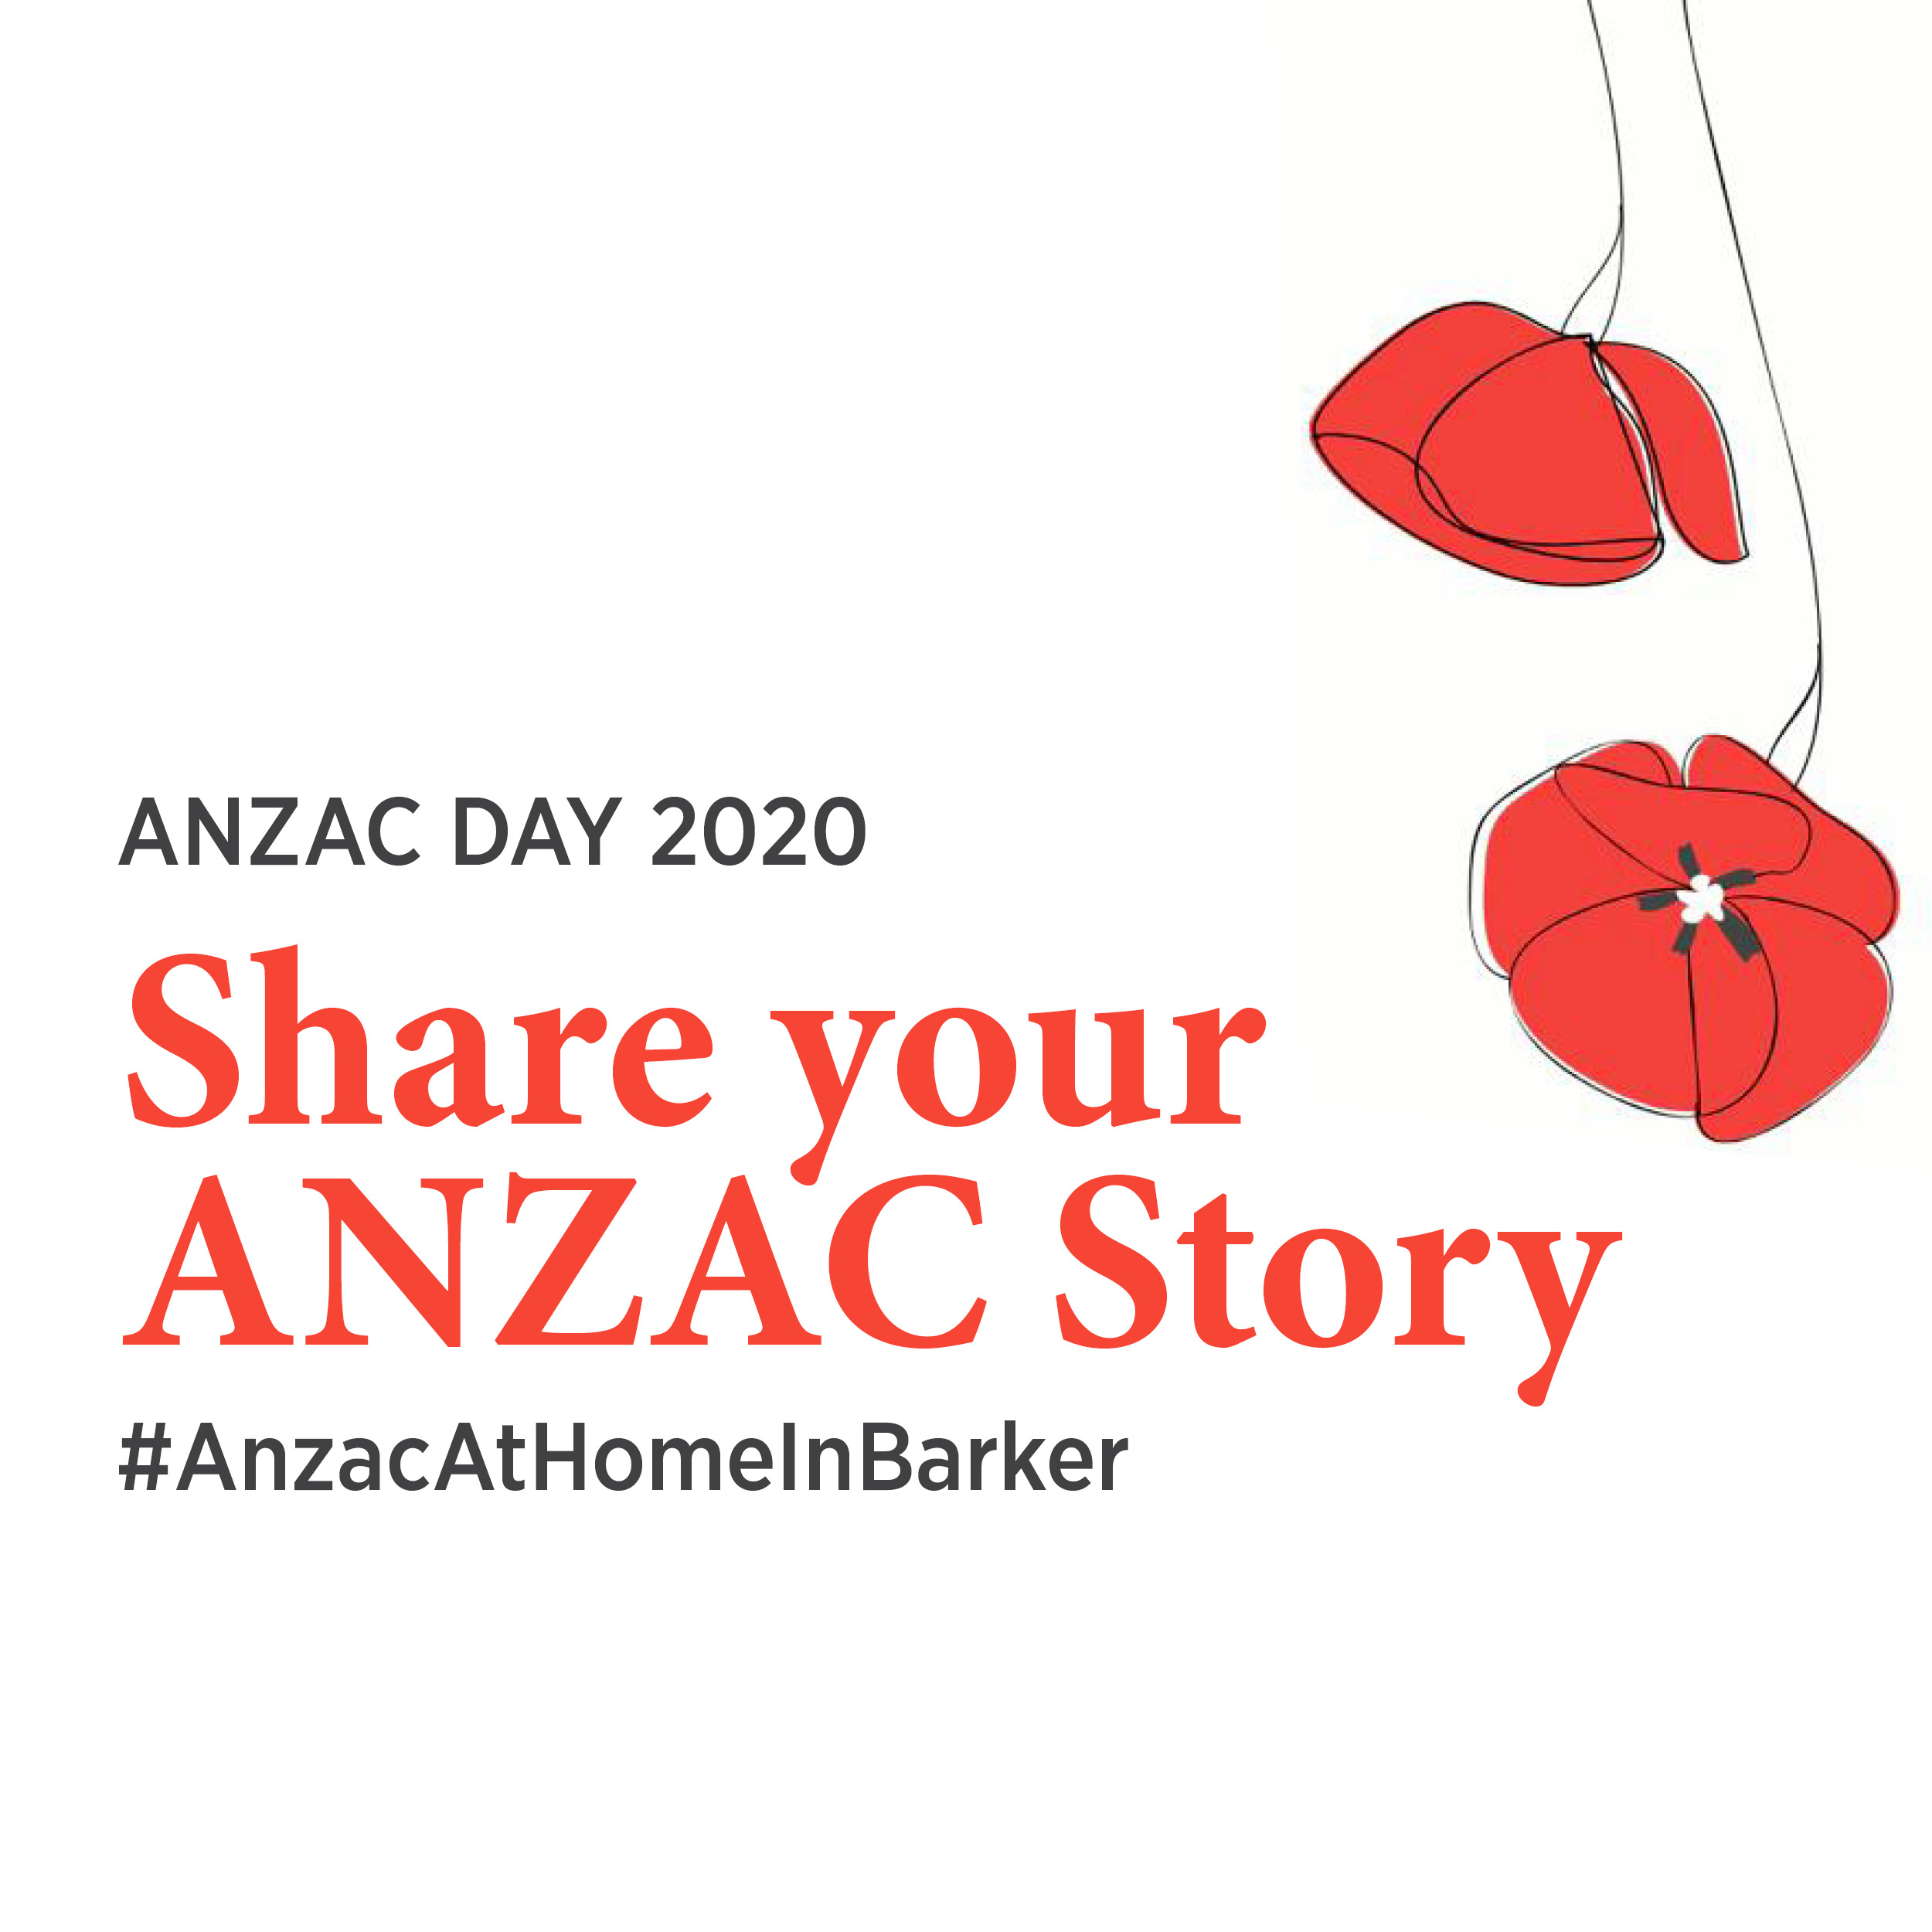 Pasin launches #AnzacAtHomeInBarker for ANZAC Day